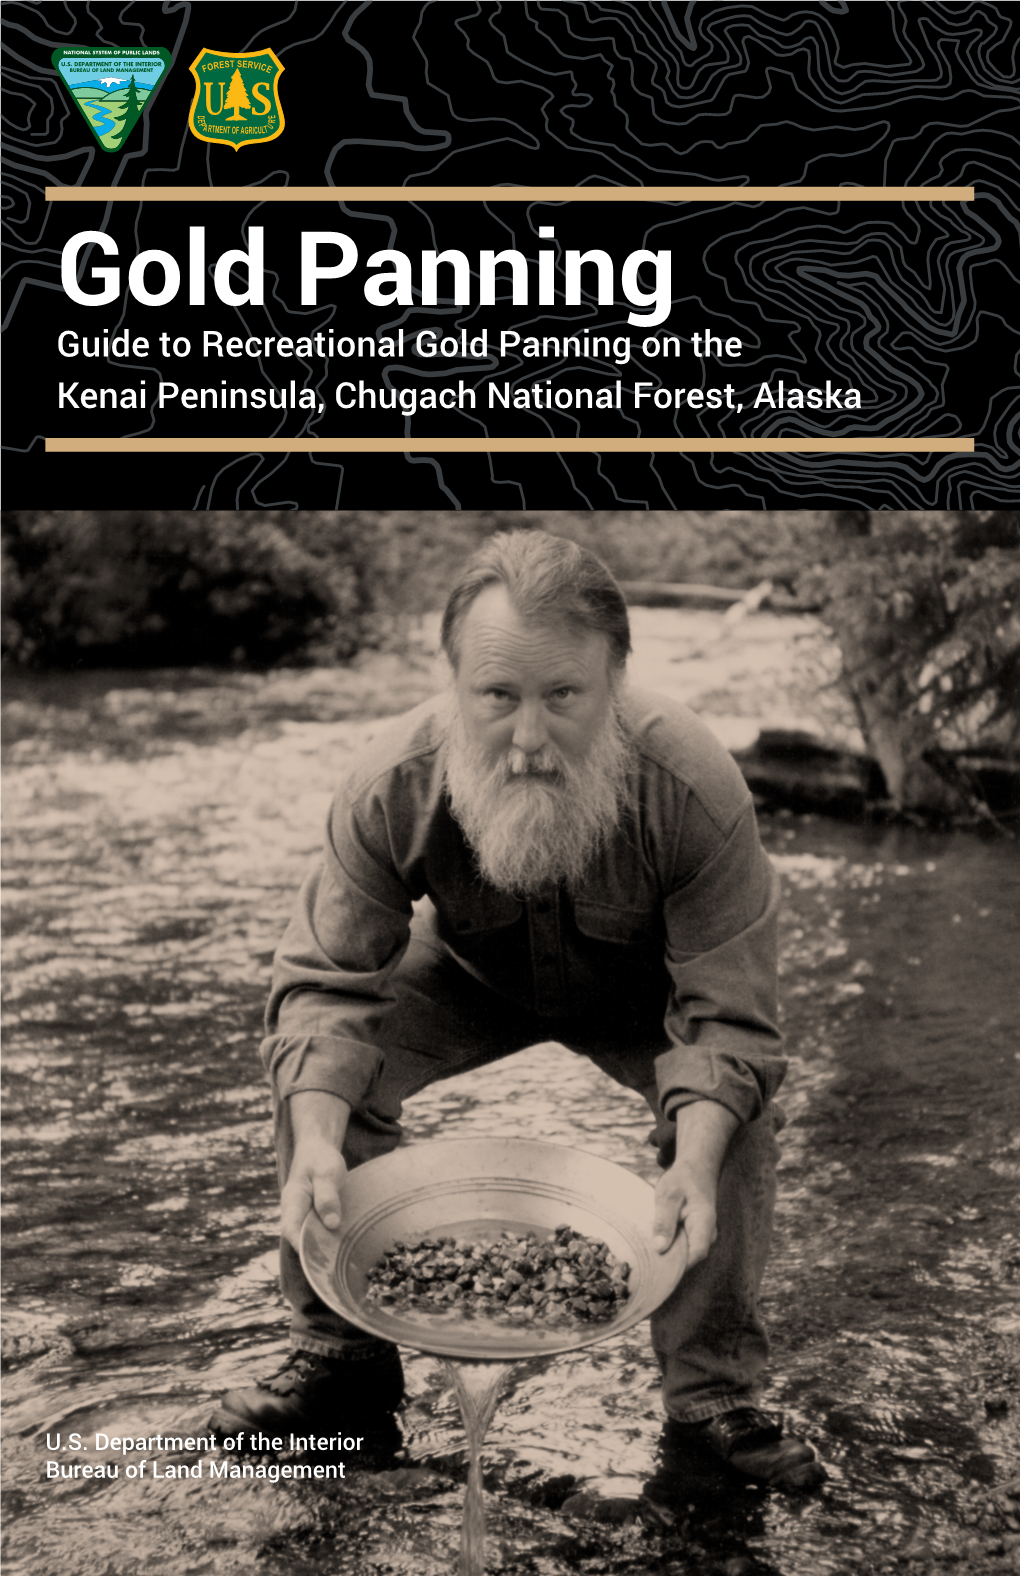 Guide to Recreational Gold Panning on the Kenai Peninsula, Chugach National Forest, Alaska